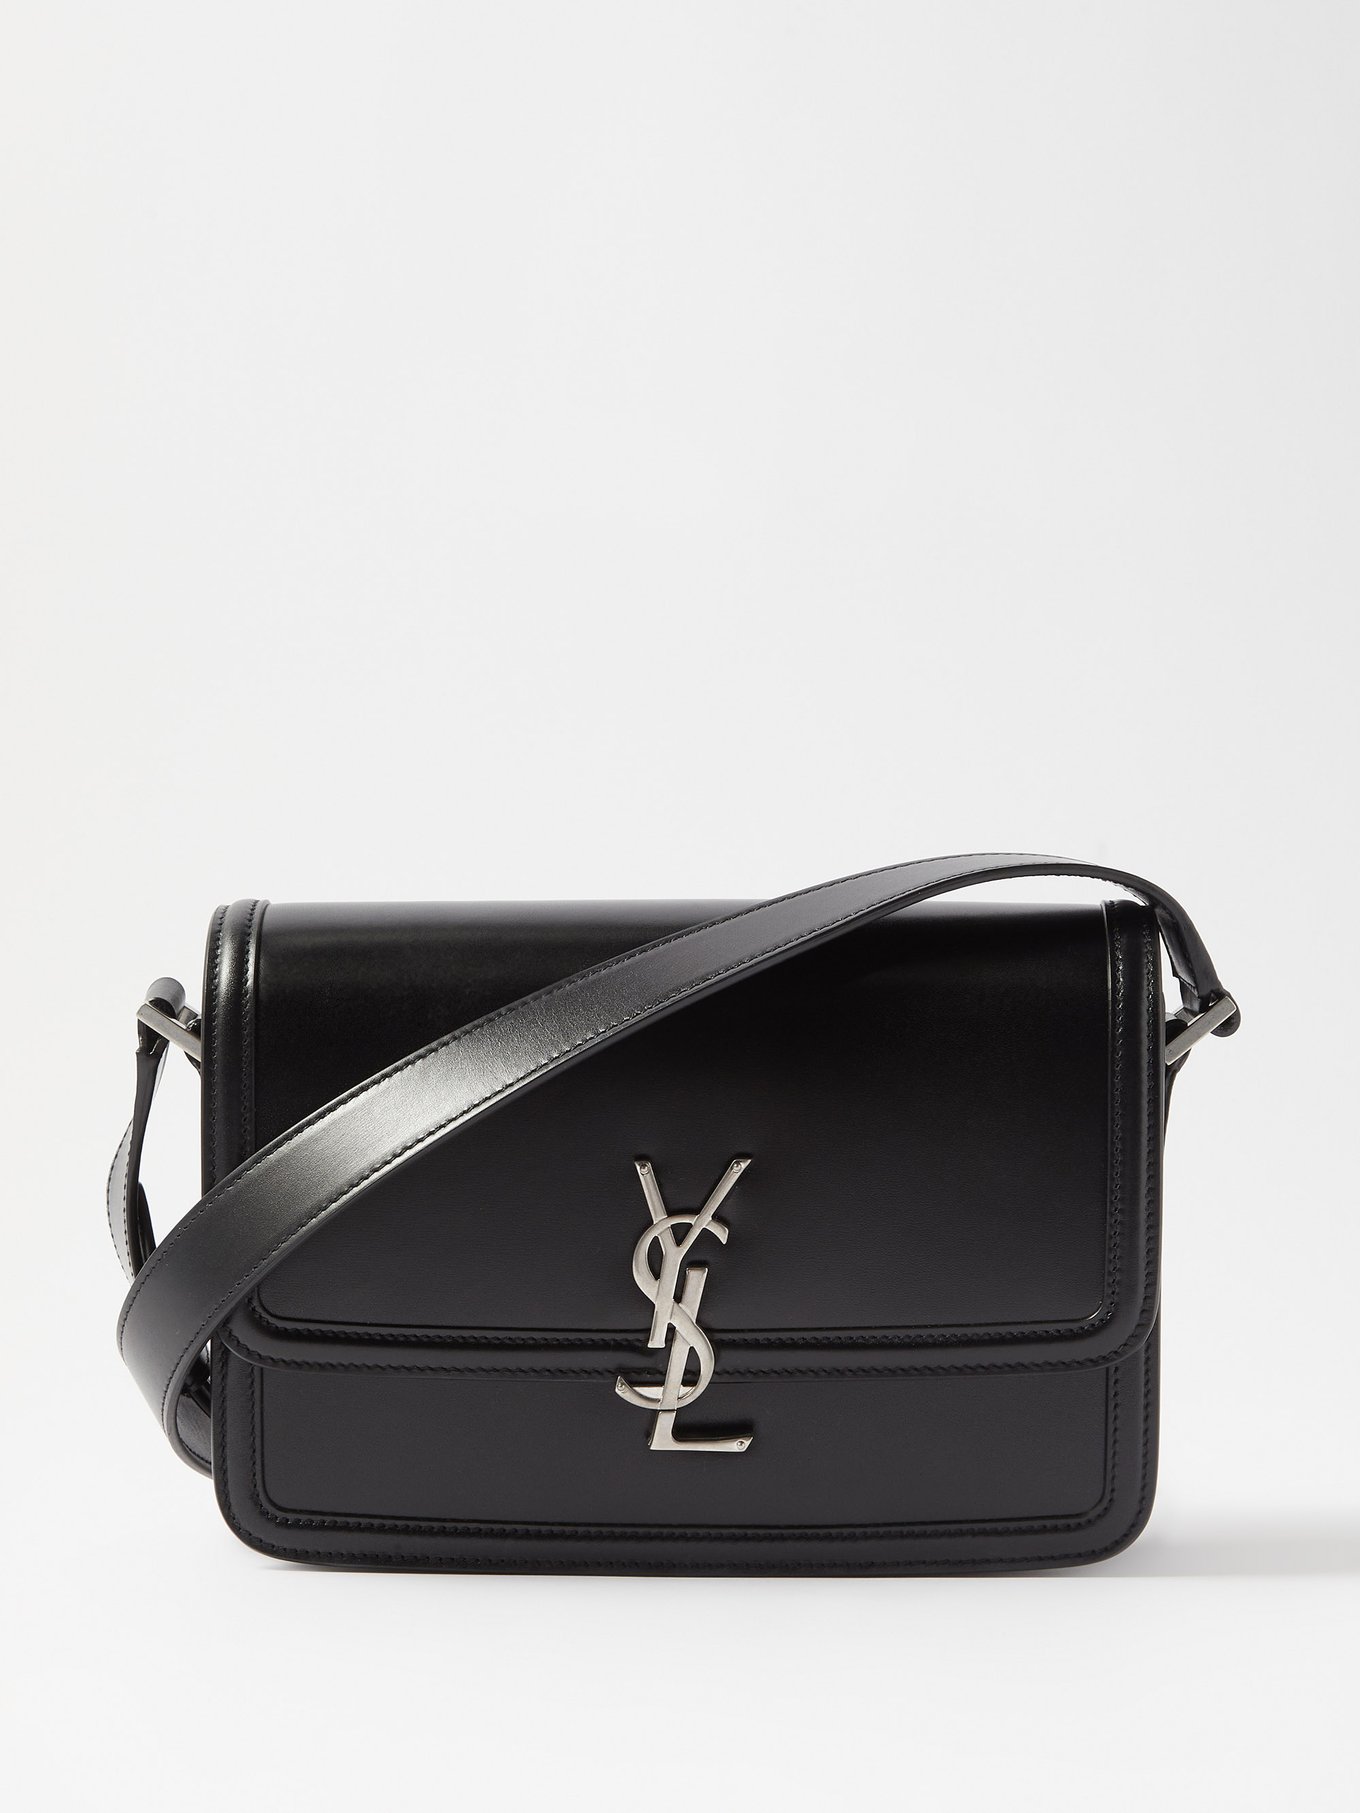 $3,200 Saint Laurent YSL Medium Solferino Leather Satchel Shoulder Bag in  Black